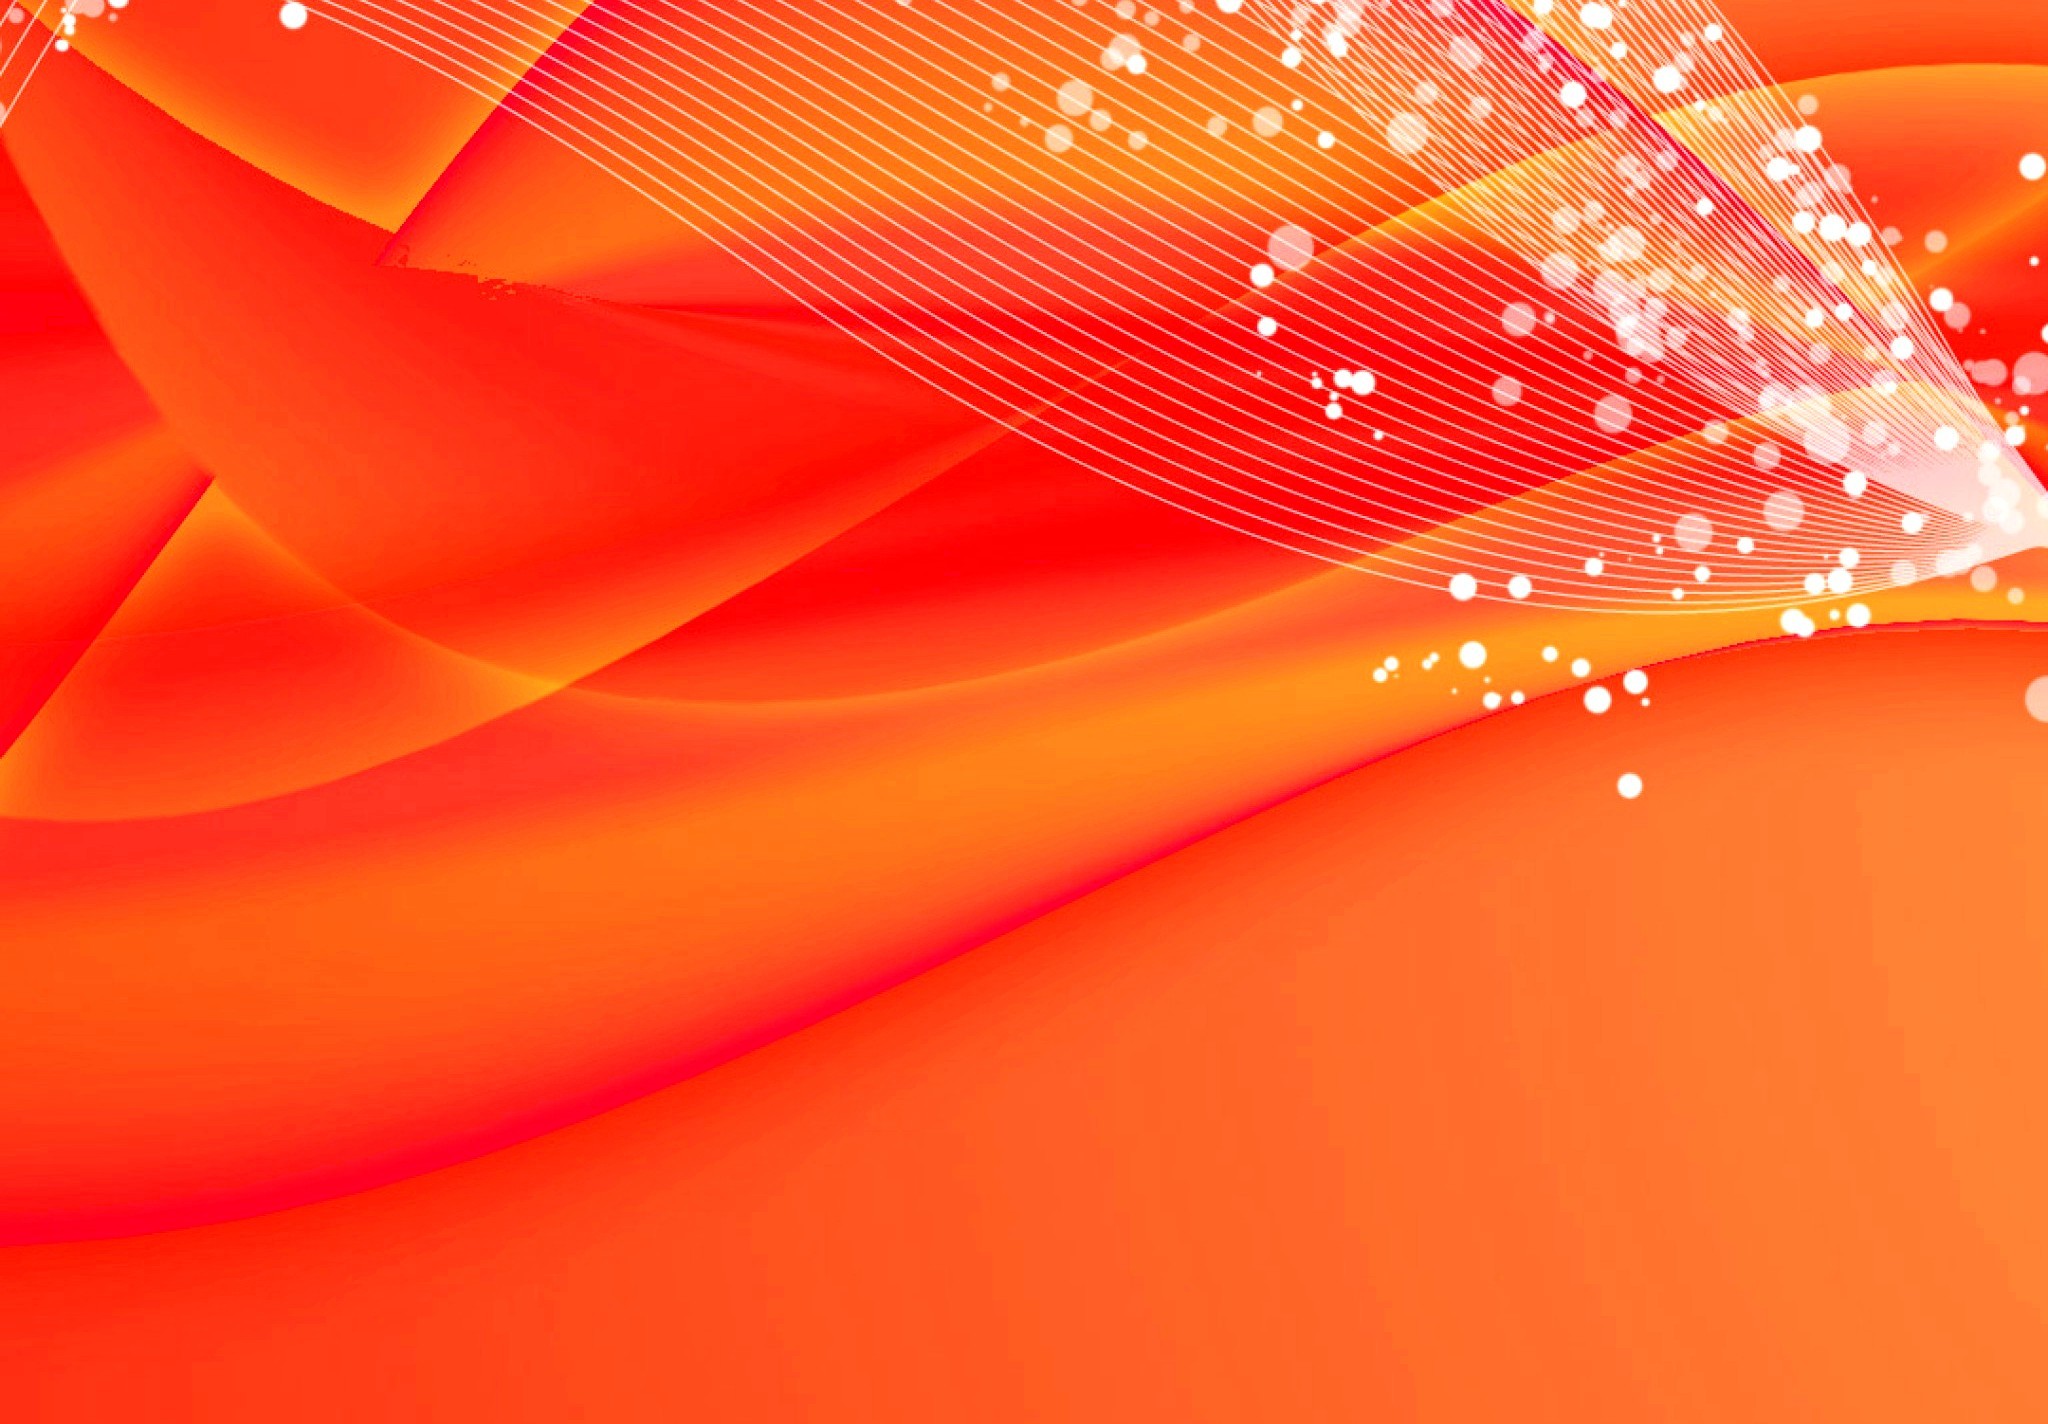 Wallpaper Orange Pink Lines Bubbles | Free Images at Clker .